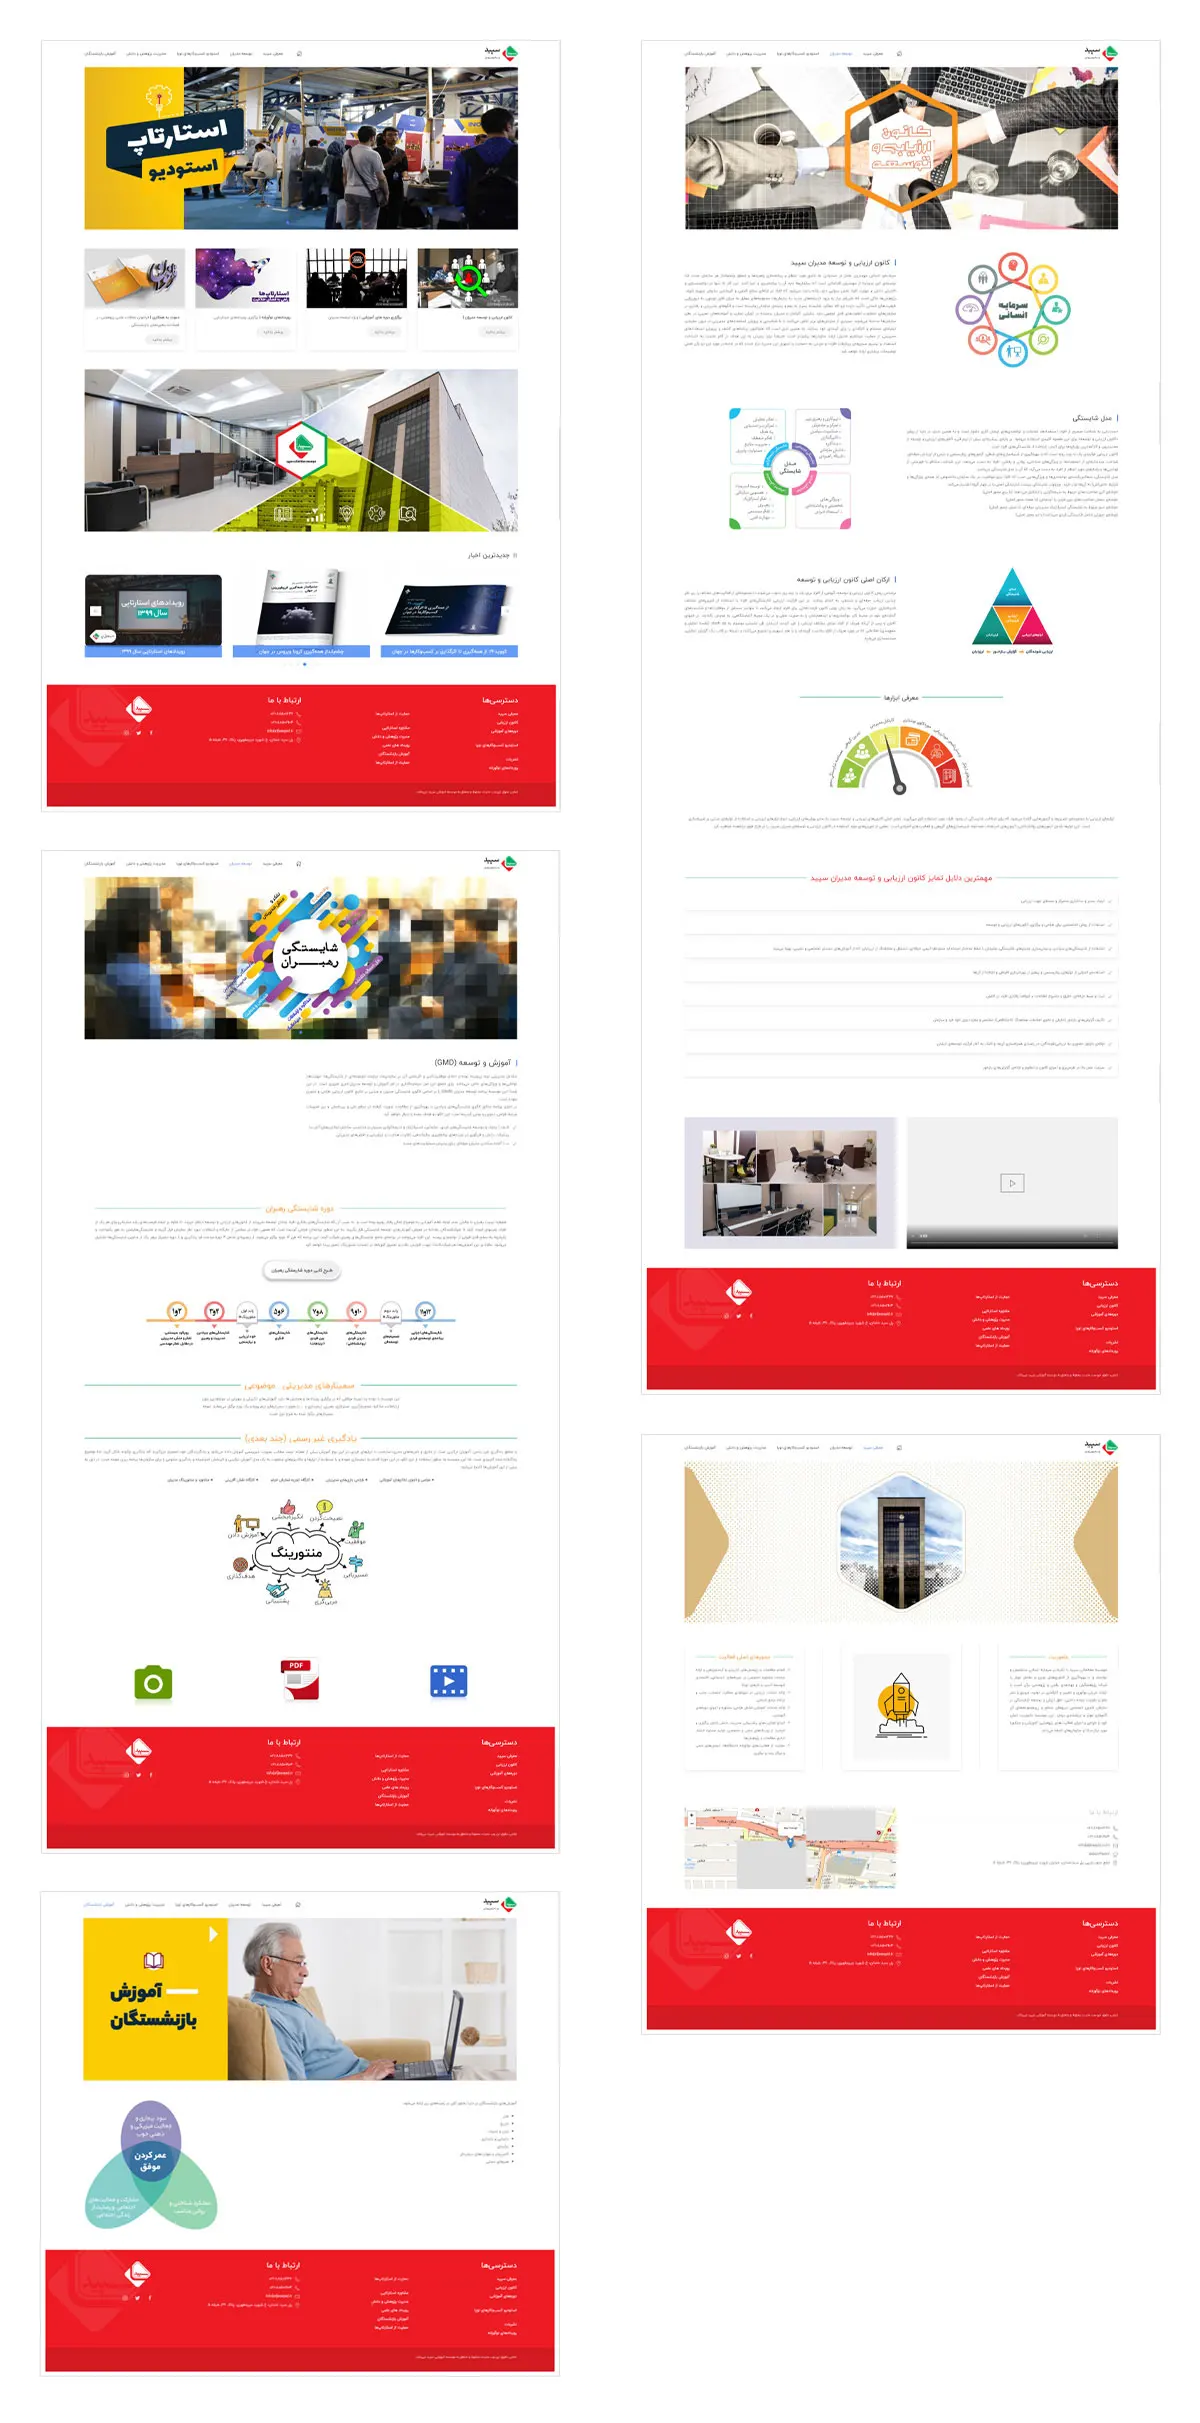 Sepid Study Institute website development | Hossein Donyadideh